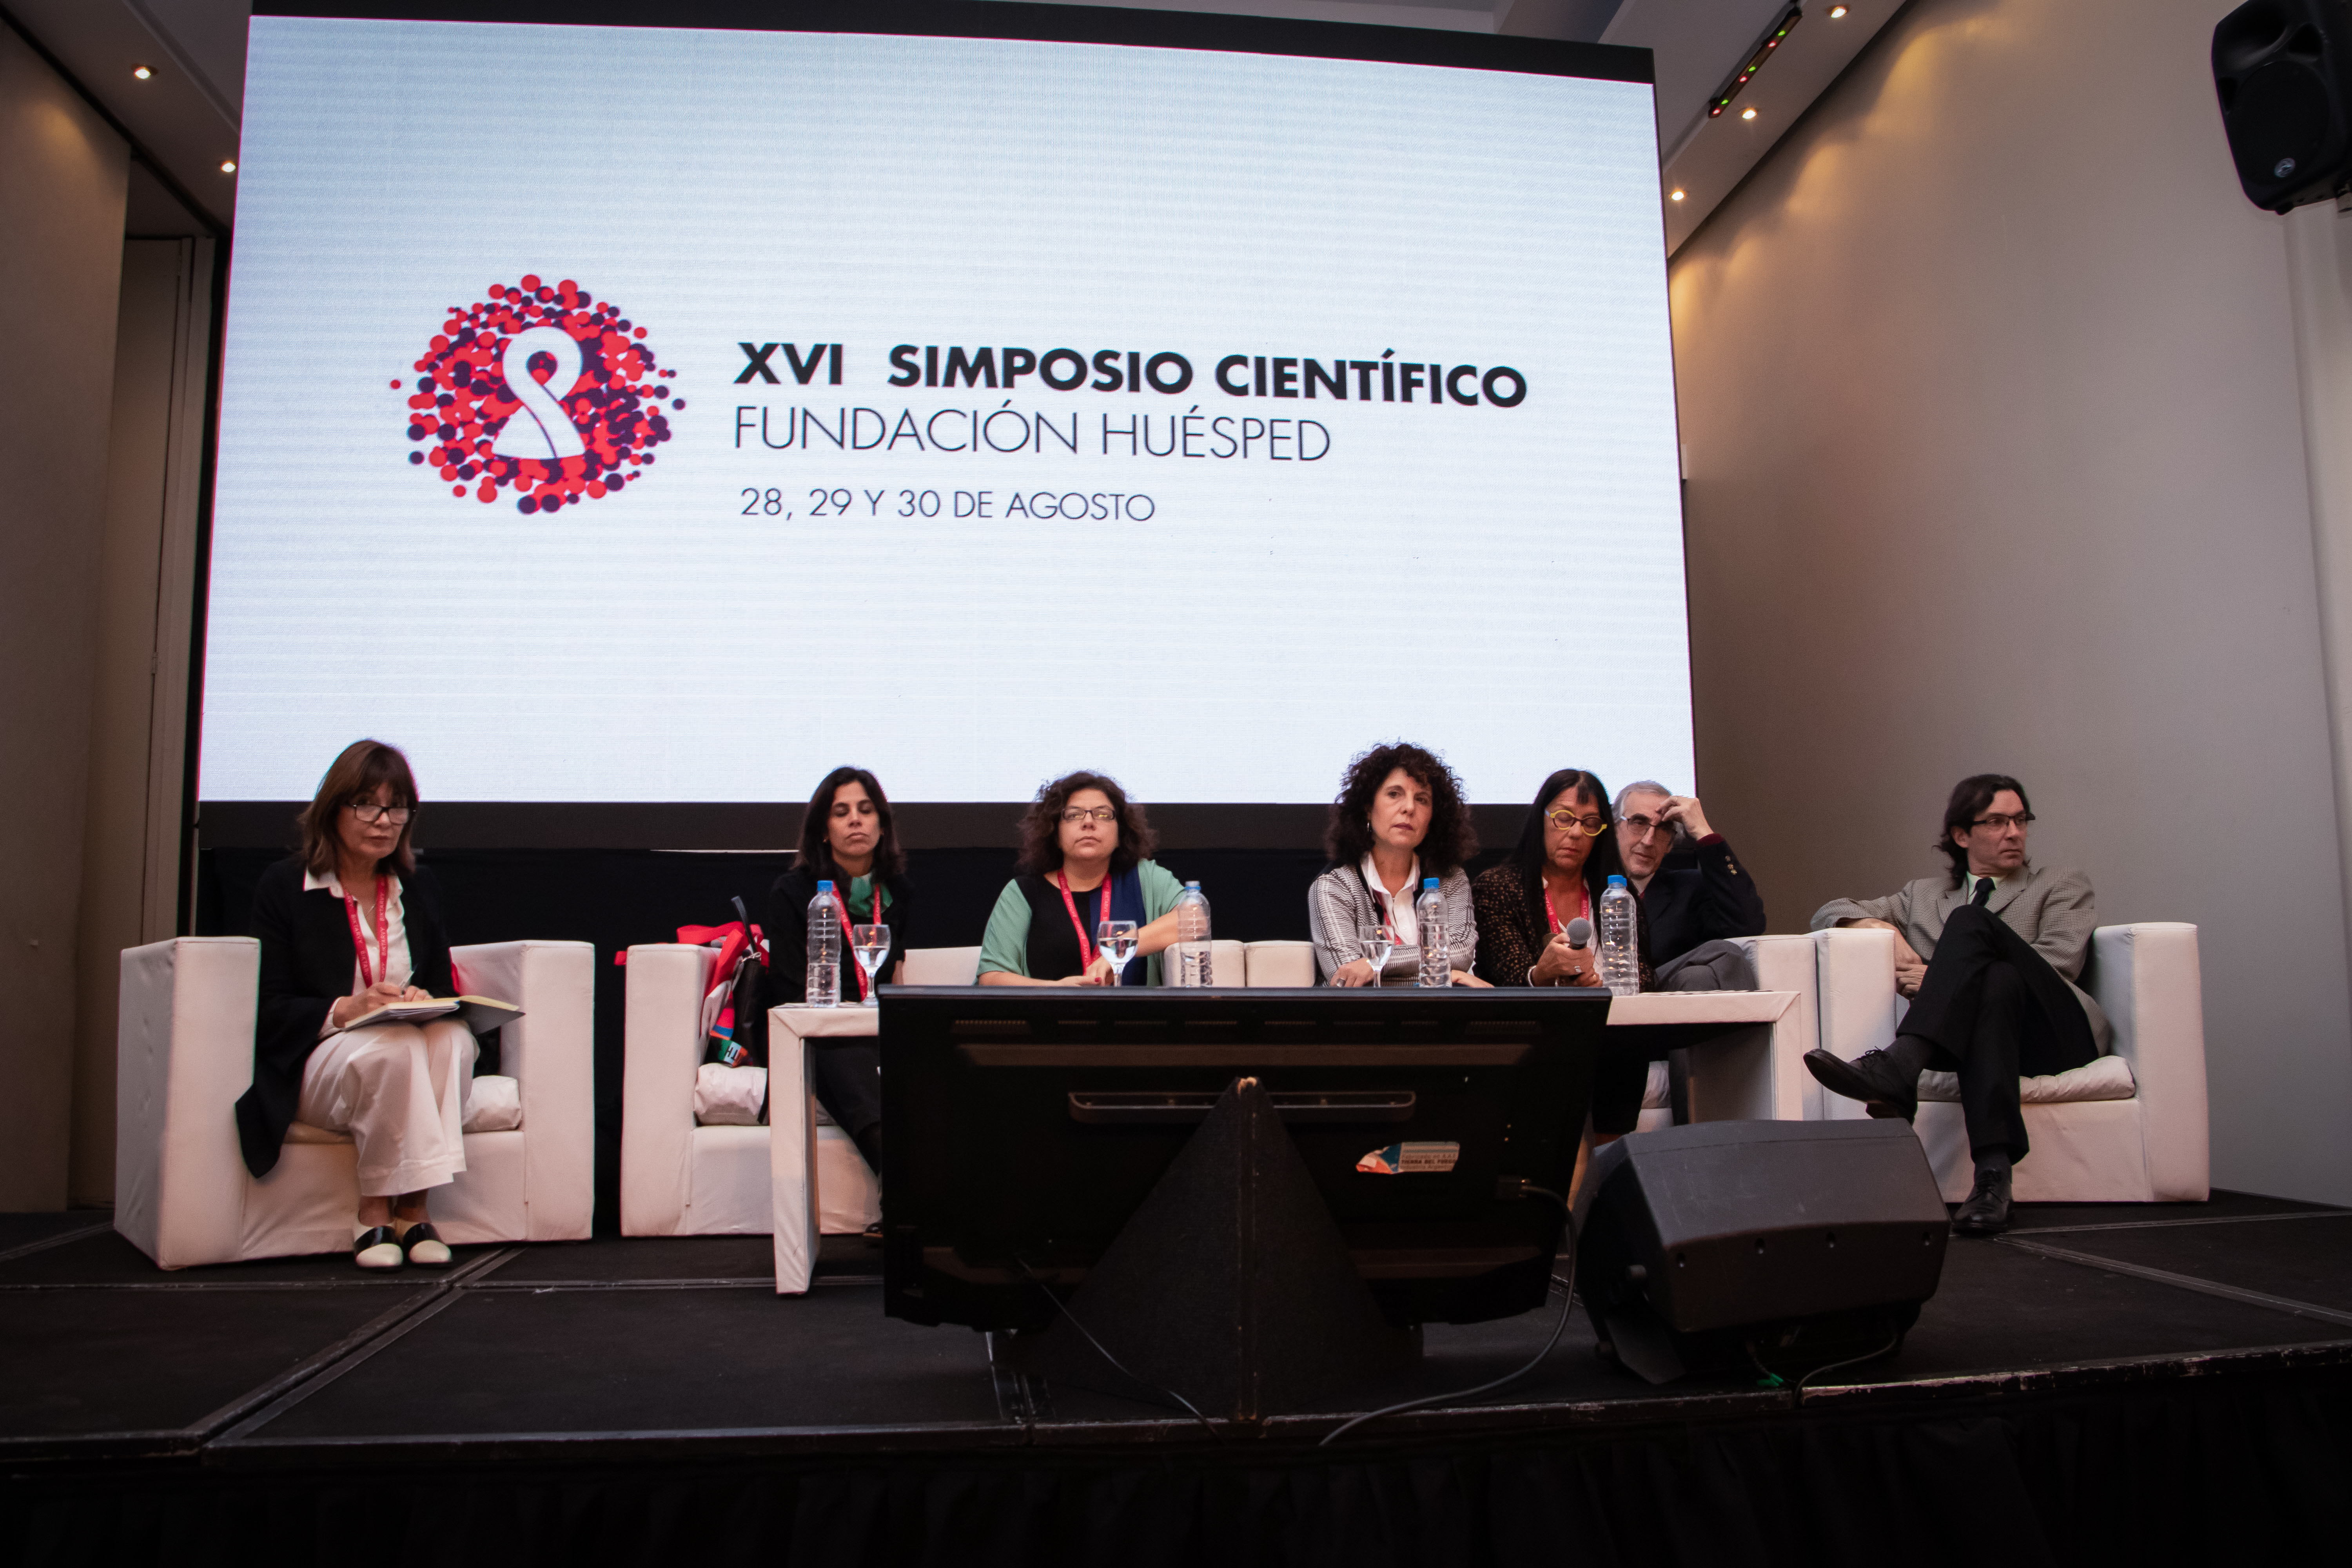 Carla Vizzotti, Alexandra Compagnucci, Lautaro de Vedia, Romina Mauas, Susana Lloveras y Javier Afeltra